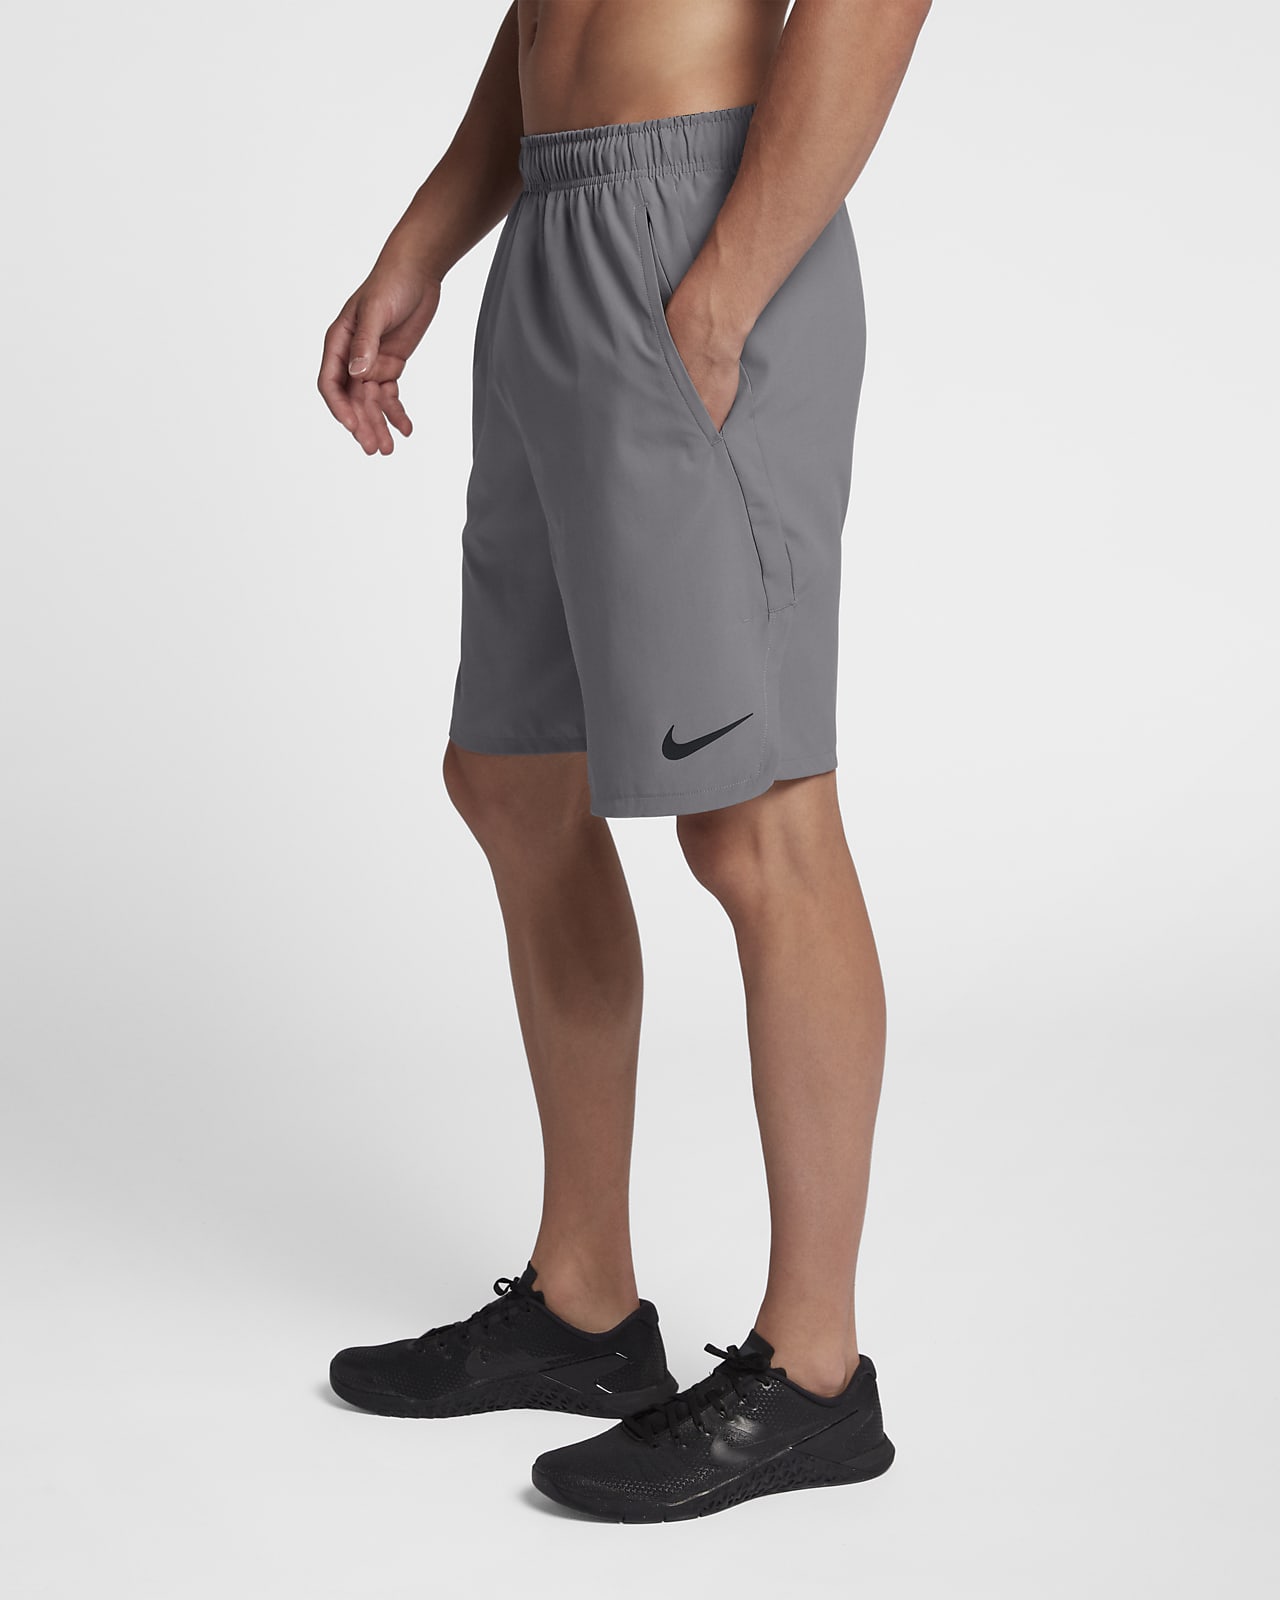 nike men's flex woven 2.0 shorts